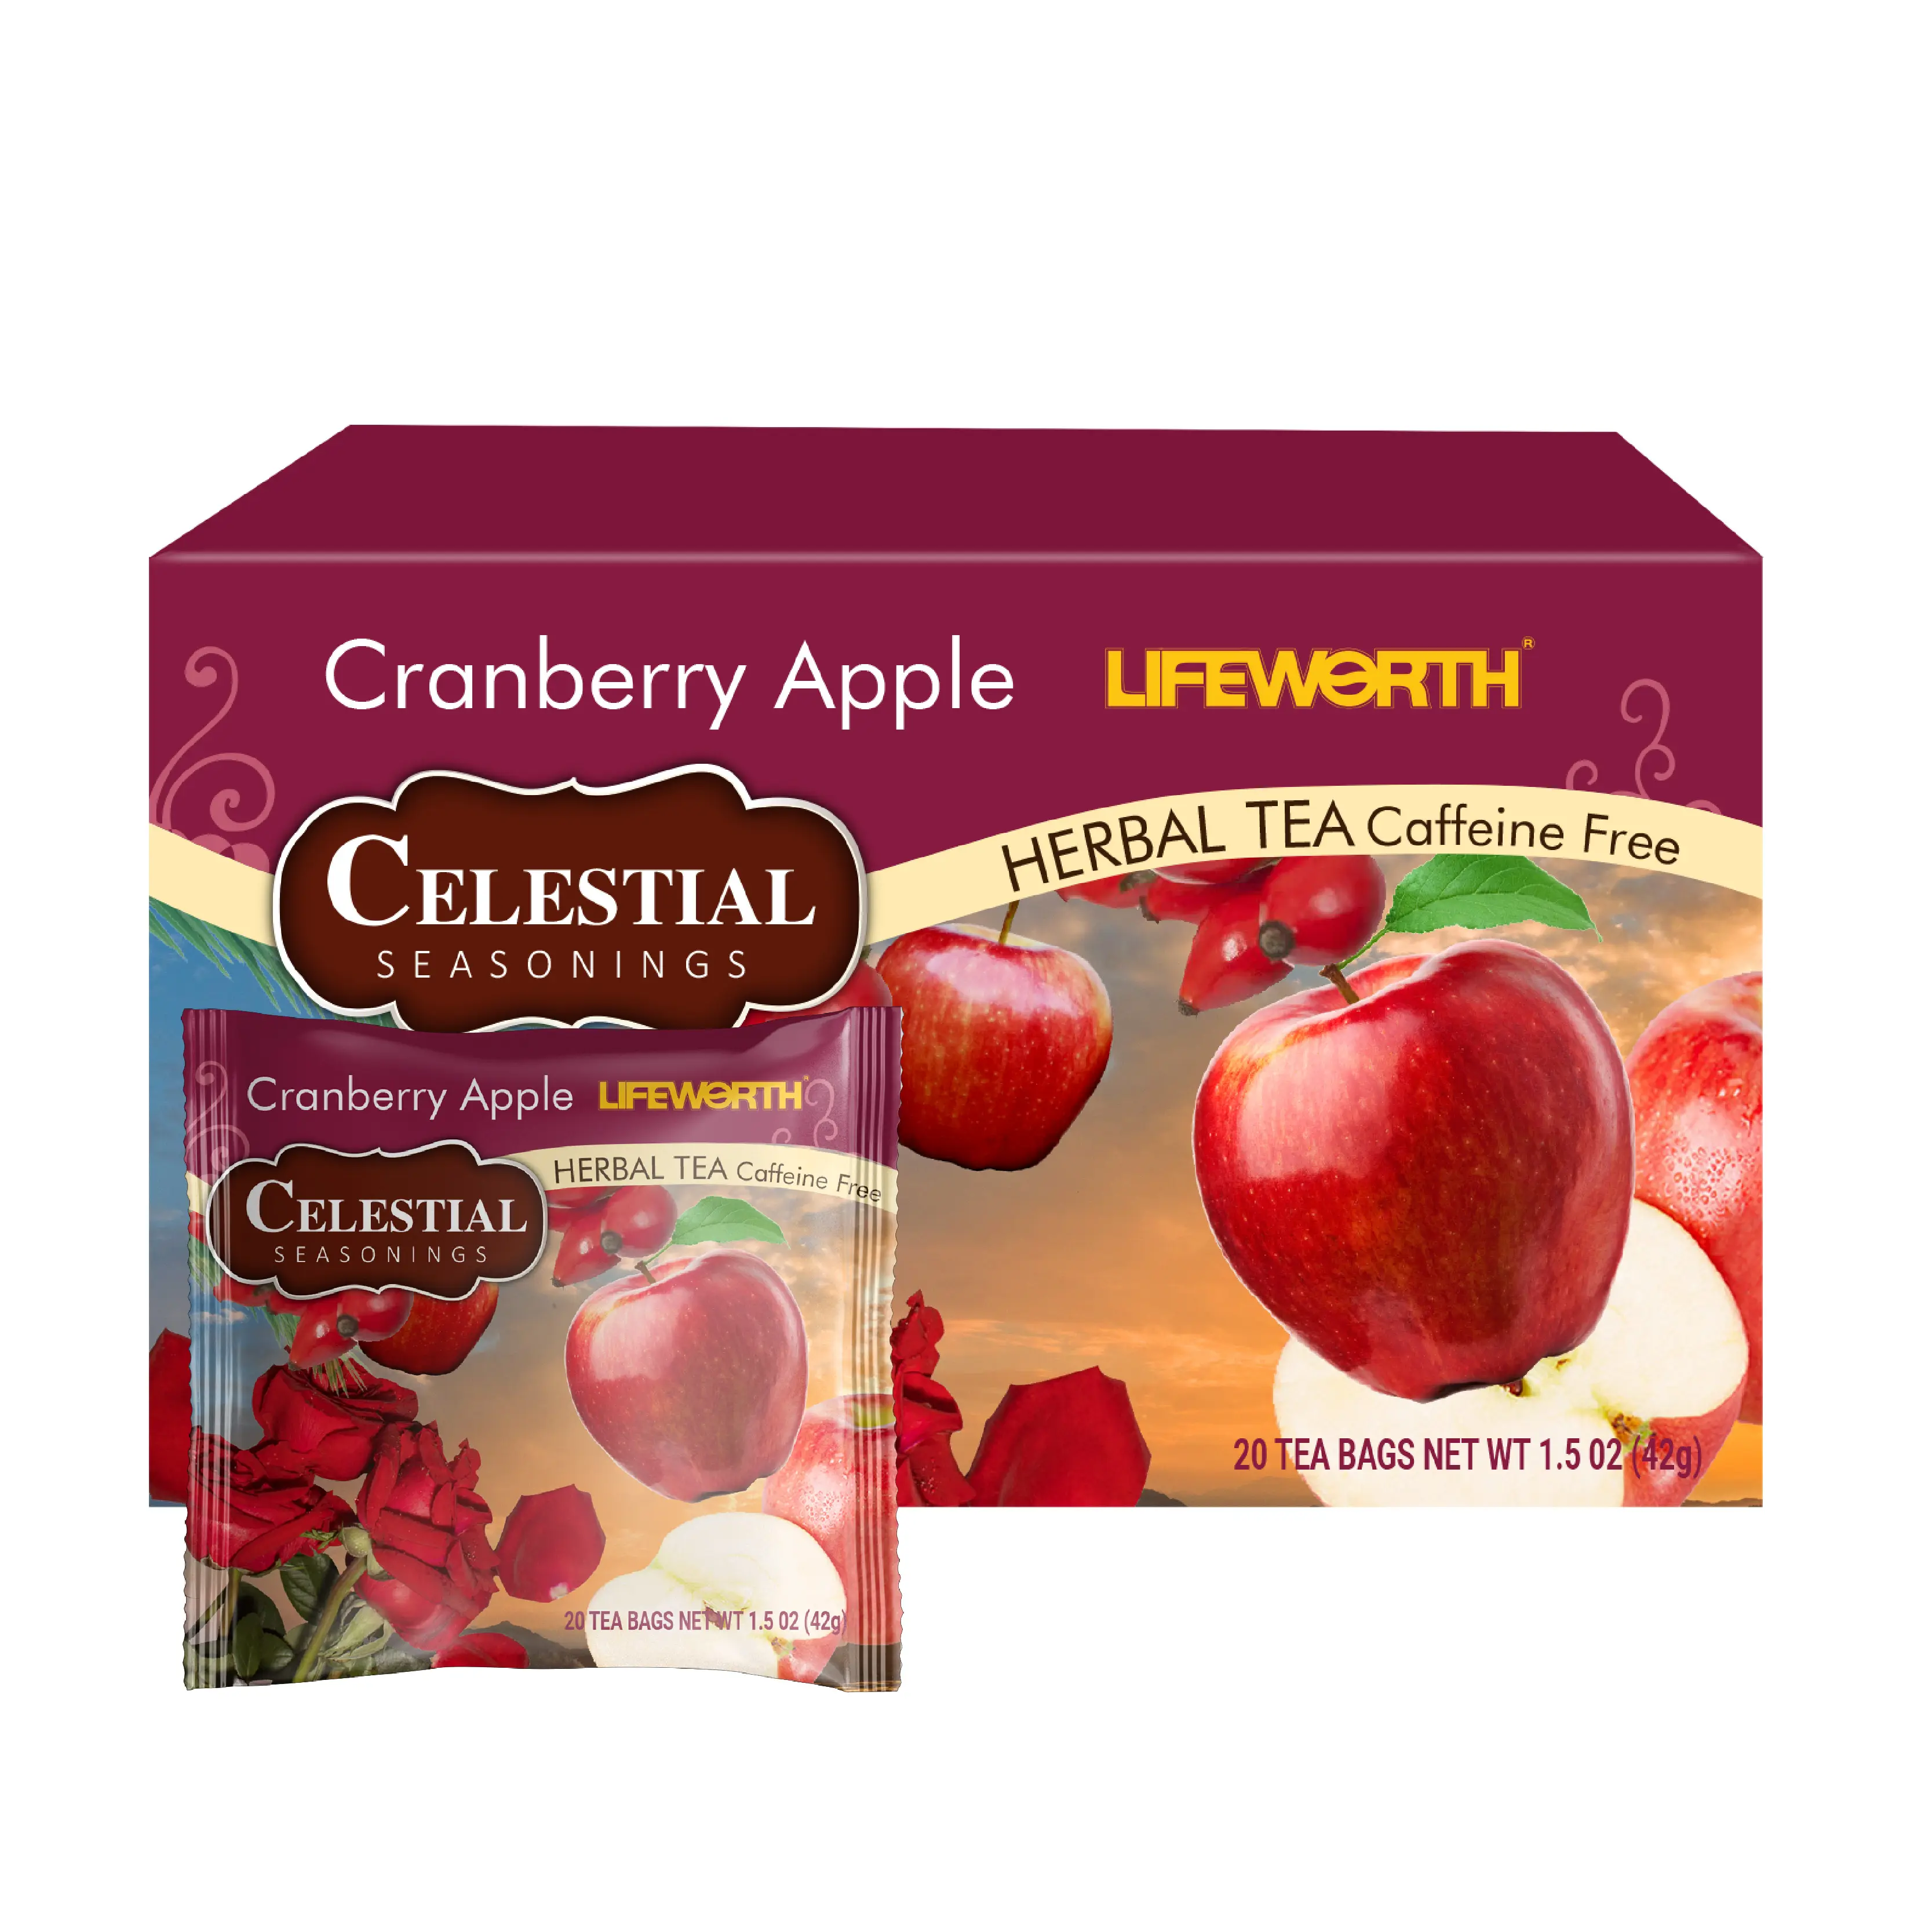 Life worth Handelsmarke Cranberry Vitamin C Kapseln Plus Cranberry Teebeutel